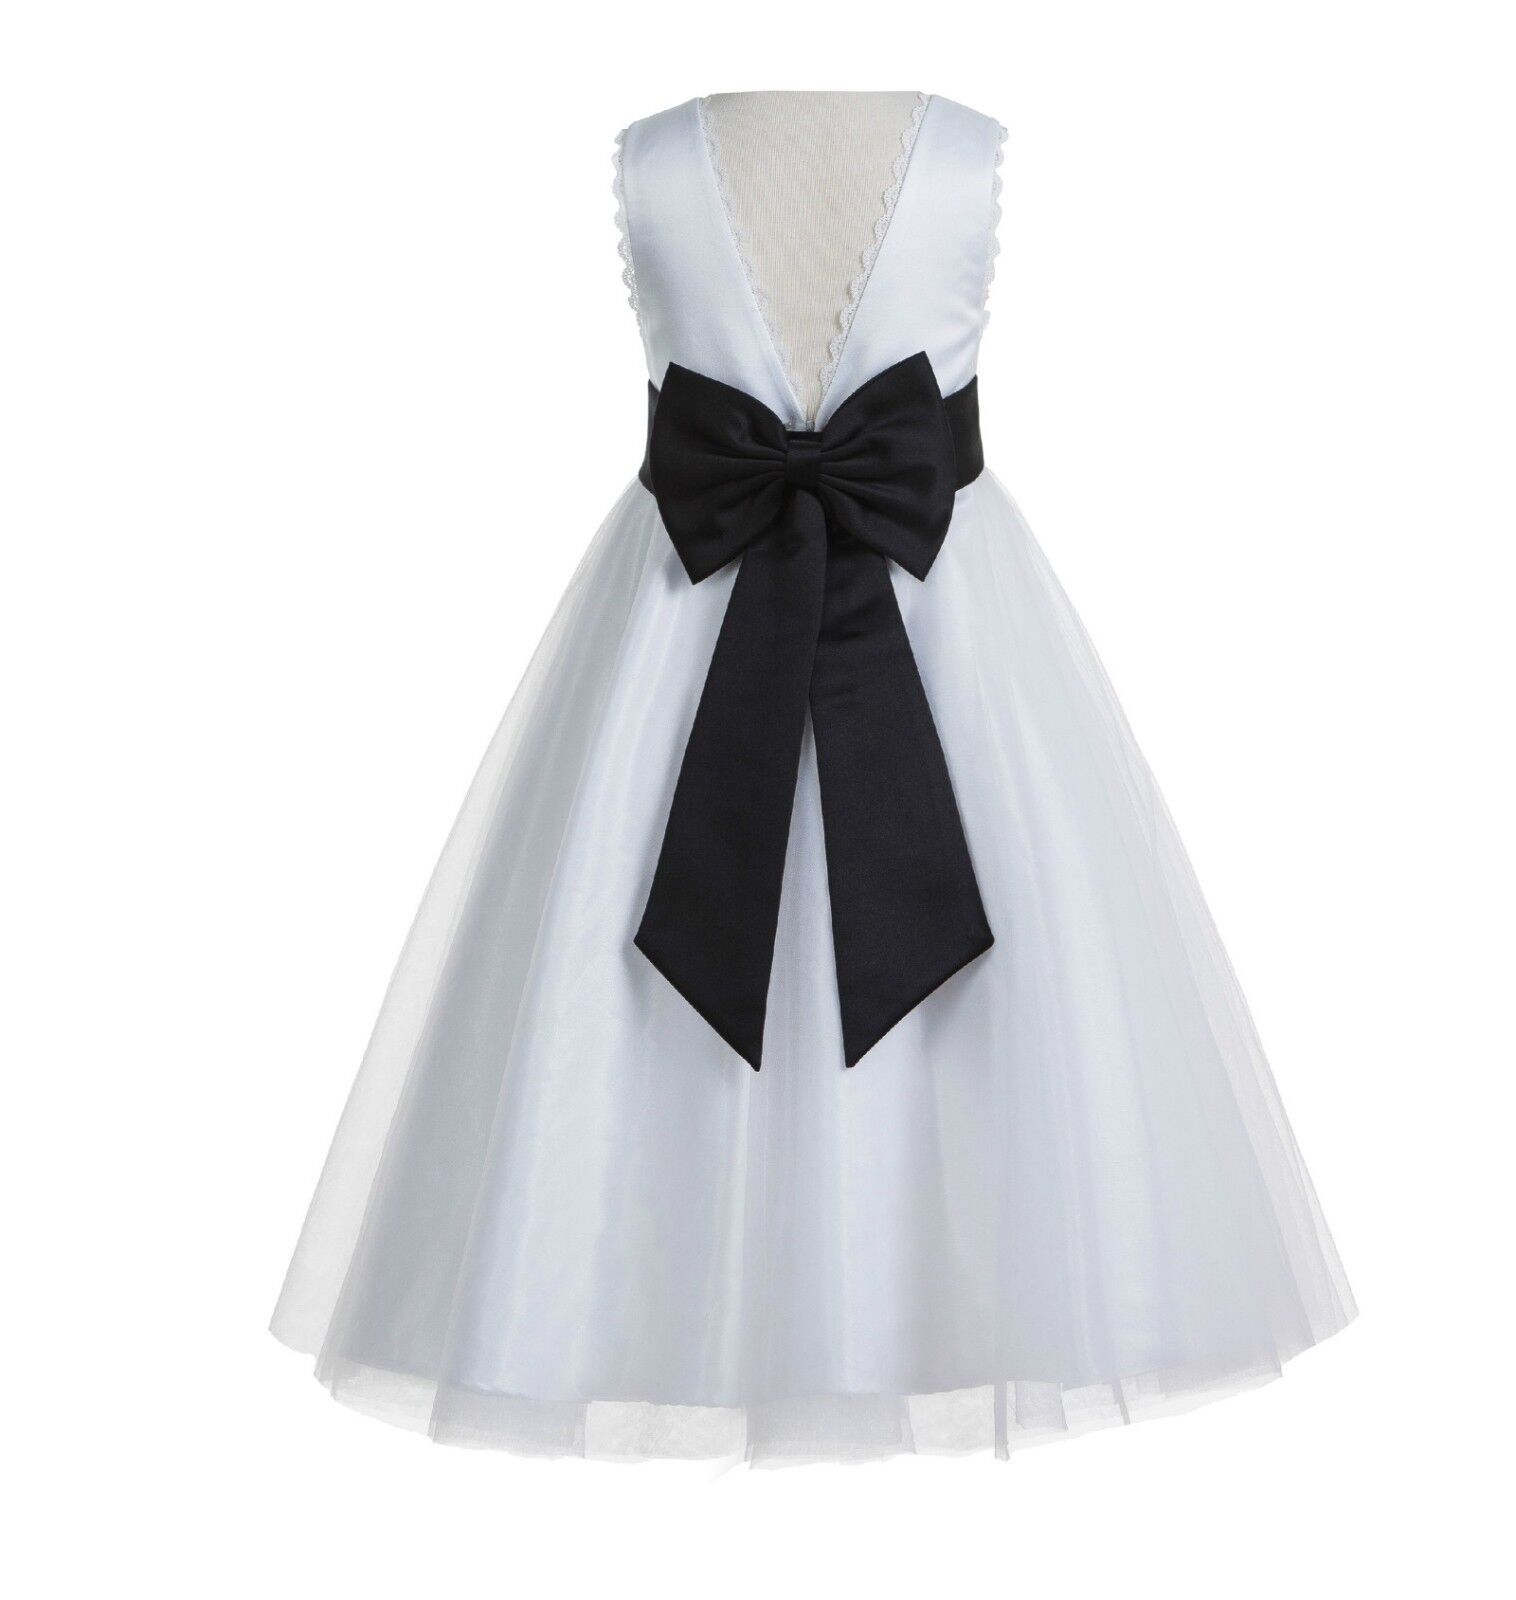 ekidsbridal Ivory V-Back Lace Edge Formal Flower Girl Dress Toddler Girl Dresses Ball Gown Junior Bridesmaid Dress Ceremonial Gown 183T